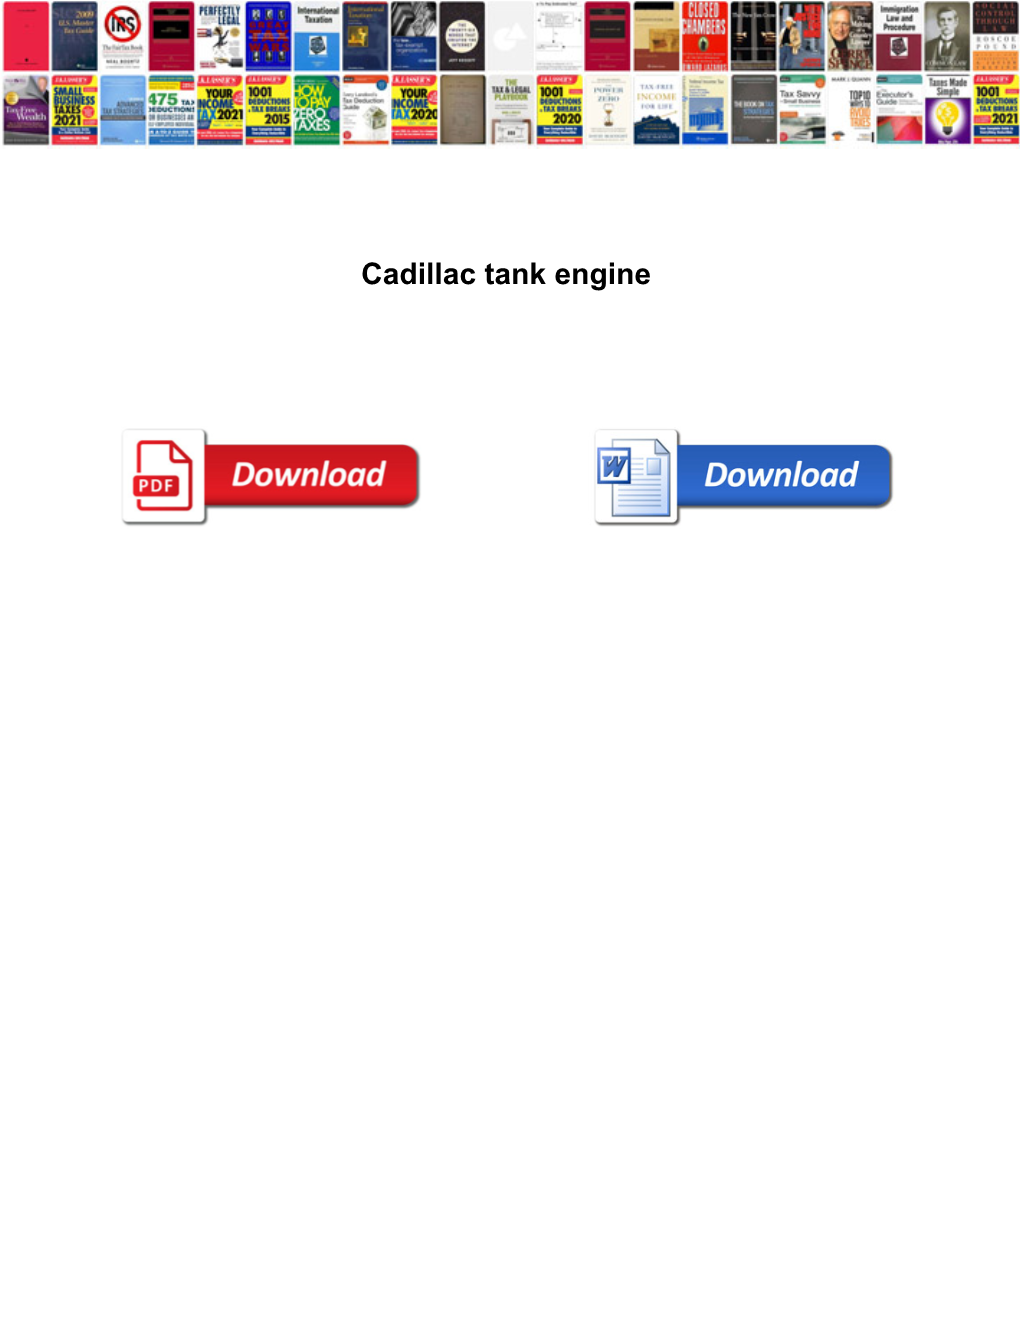 Cadillac Tank Engine Tanks Portal